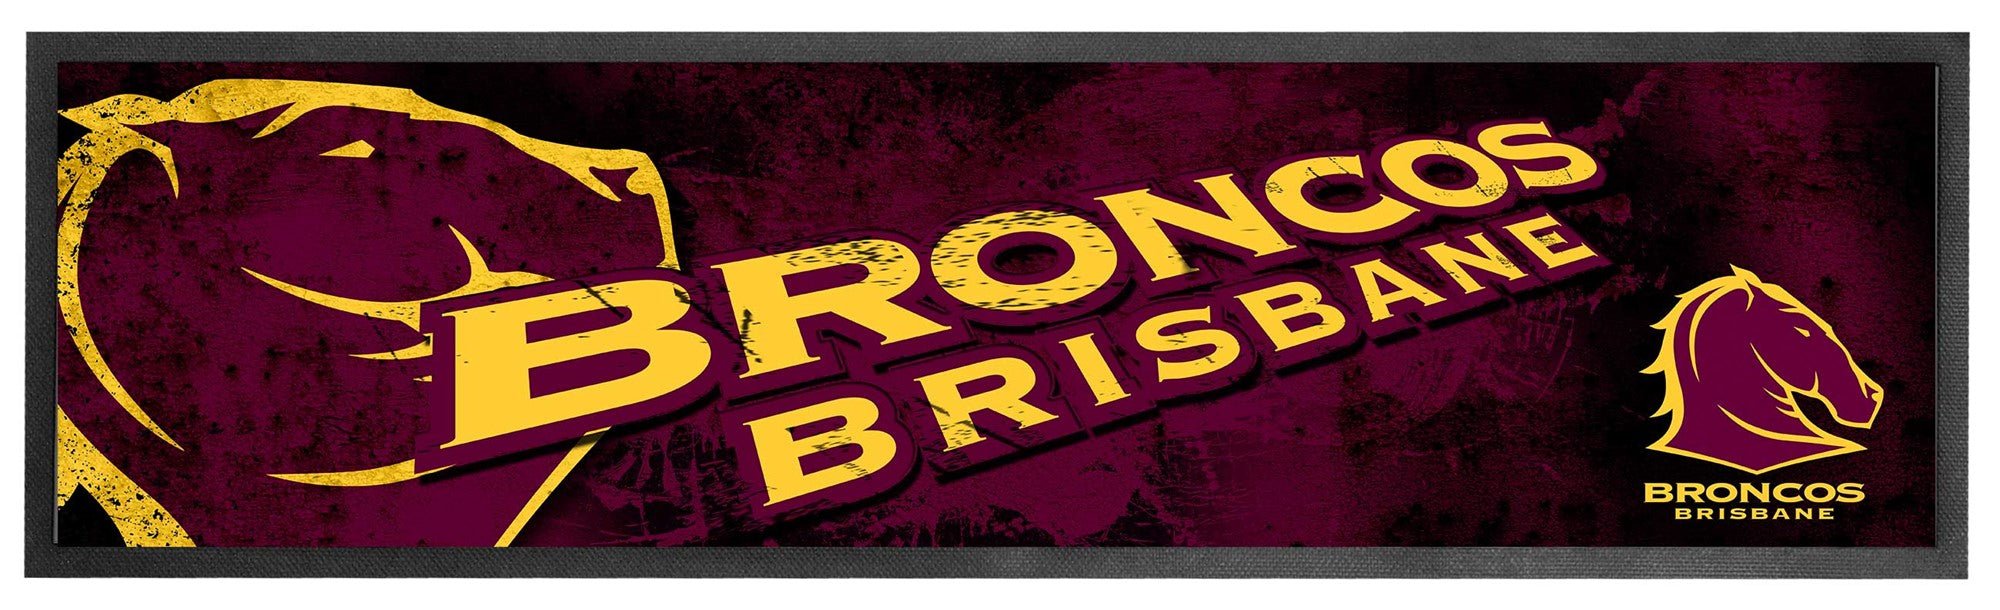 Brisbane Broncos NRL Premium Rubber-Backed Bar Mat Runner - KING CAVE